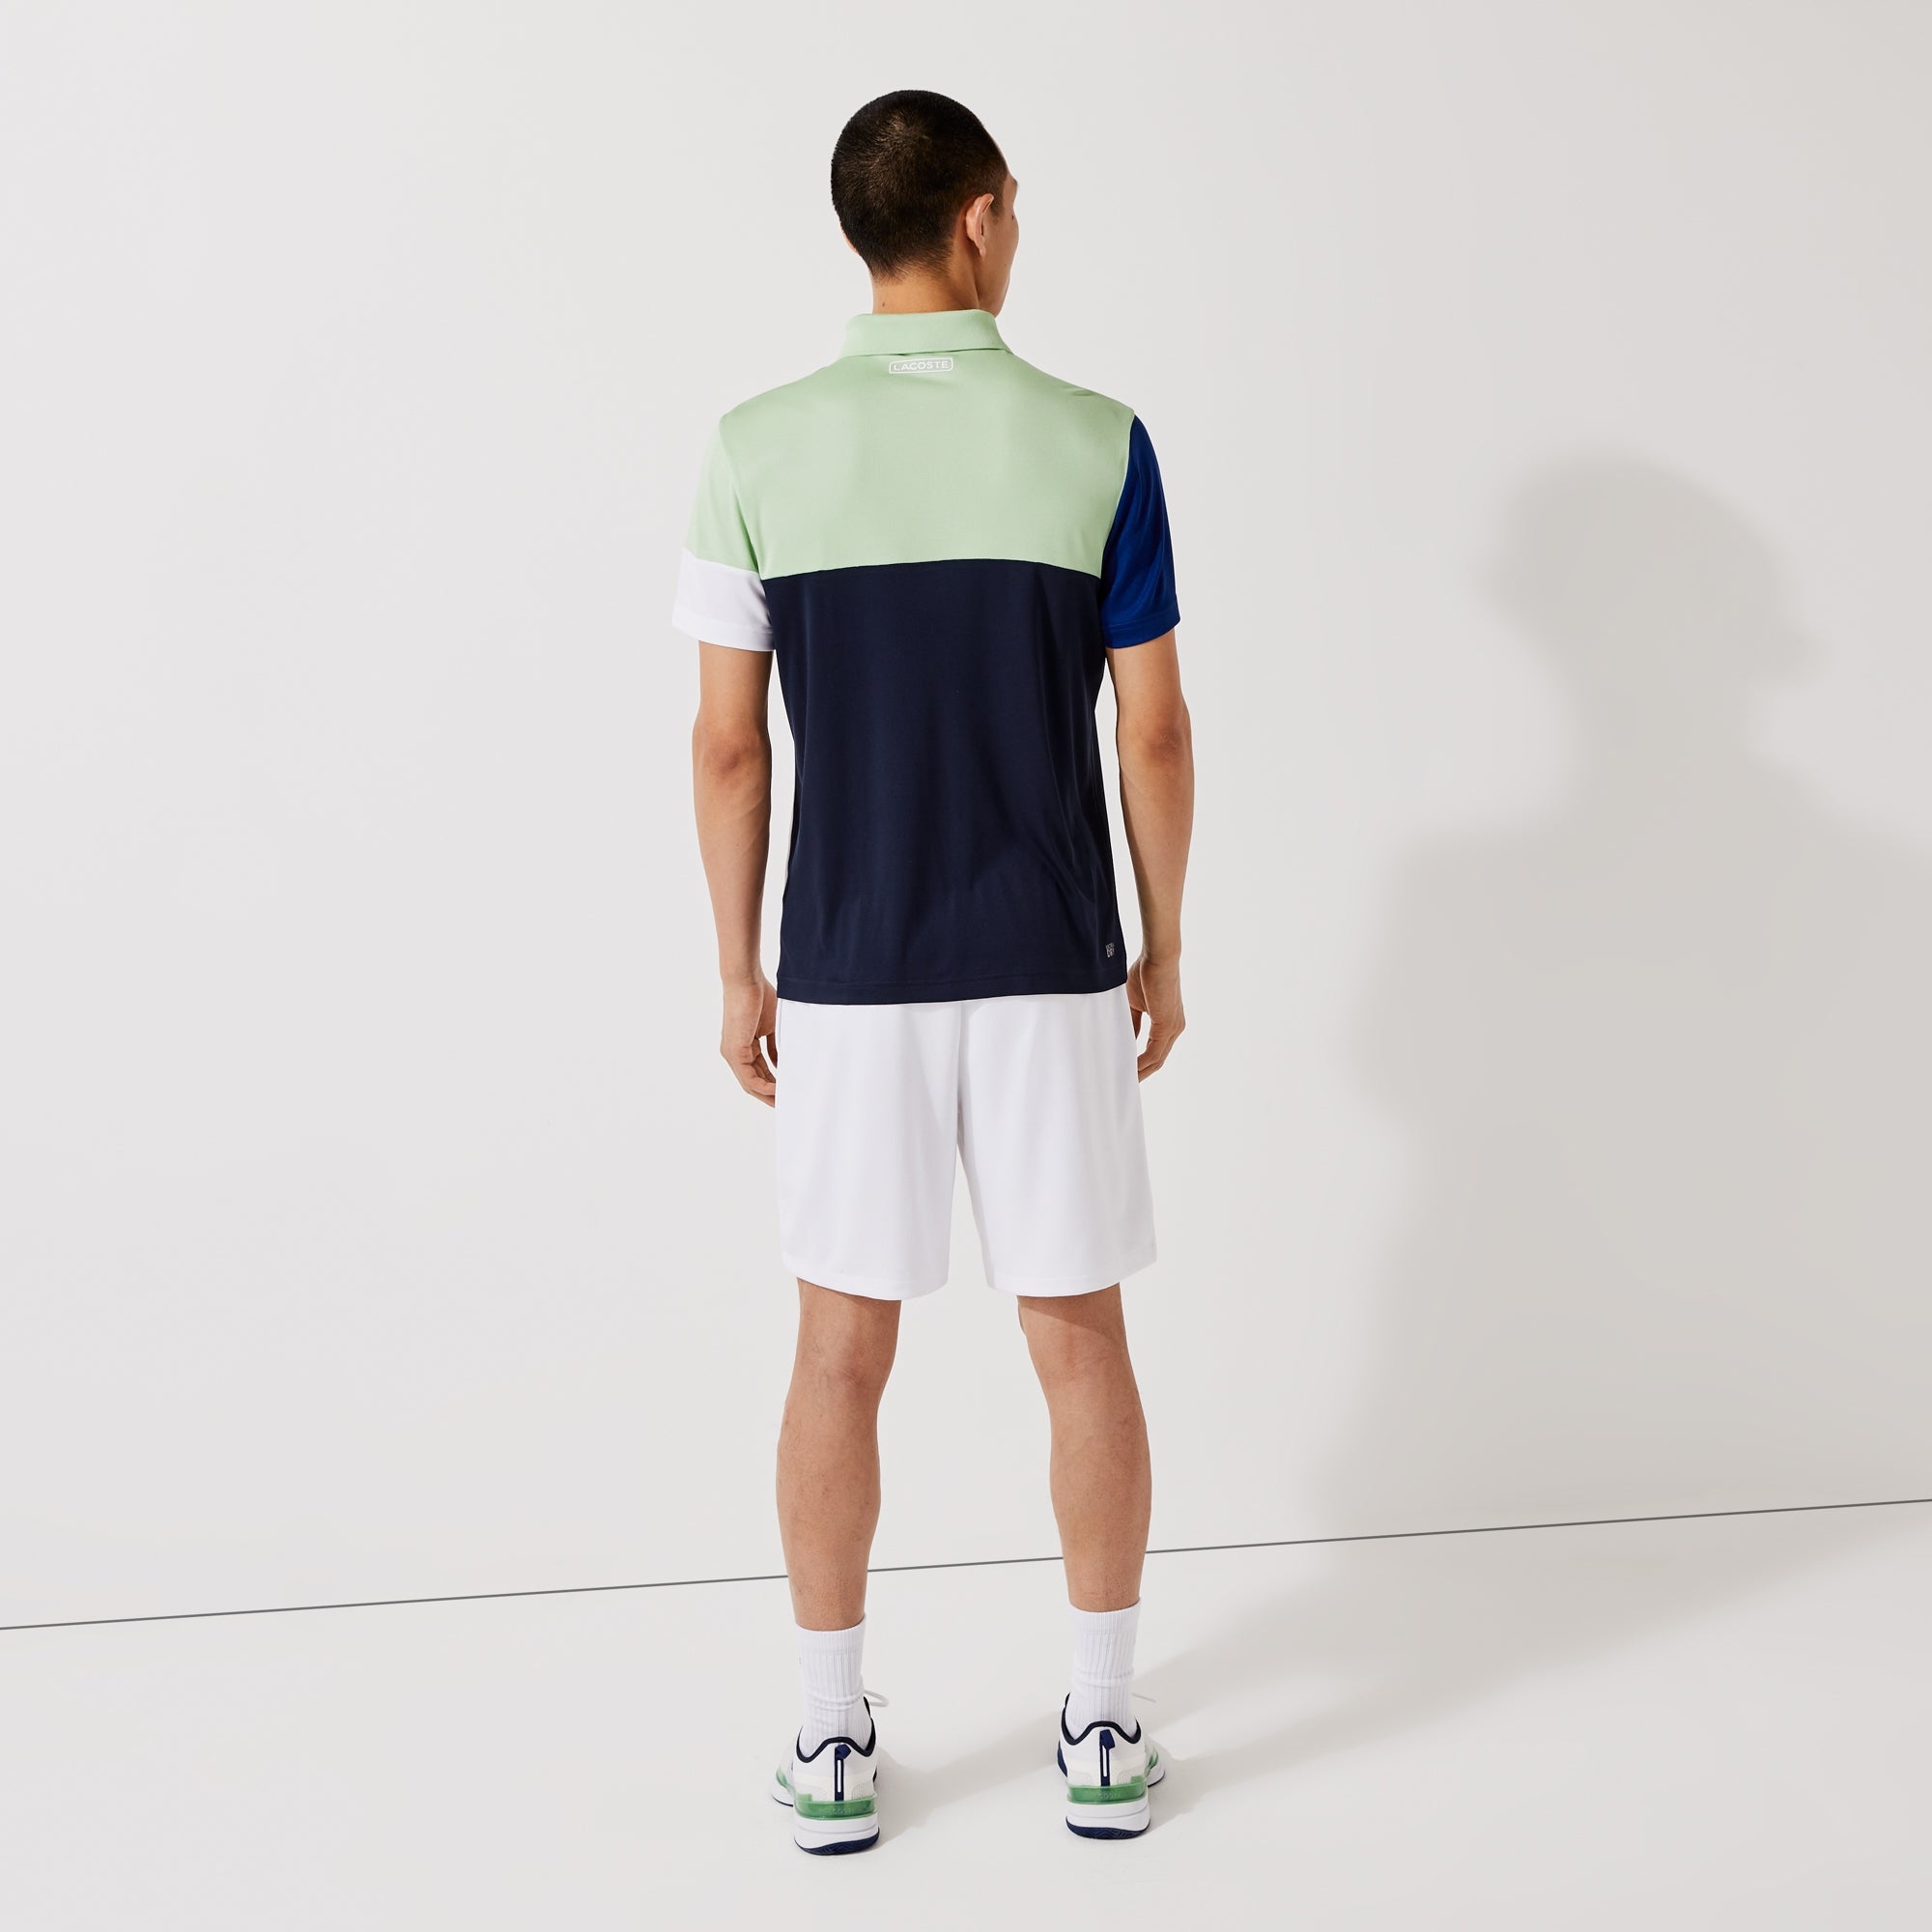 Lacoste Ultra Dry Men's Colorblock Tennis Polo Green (2)